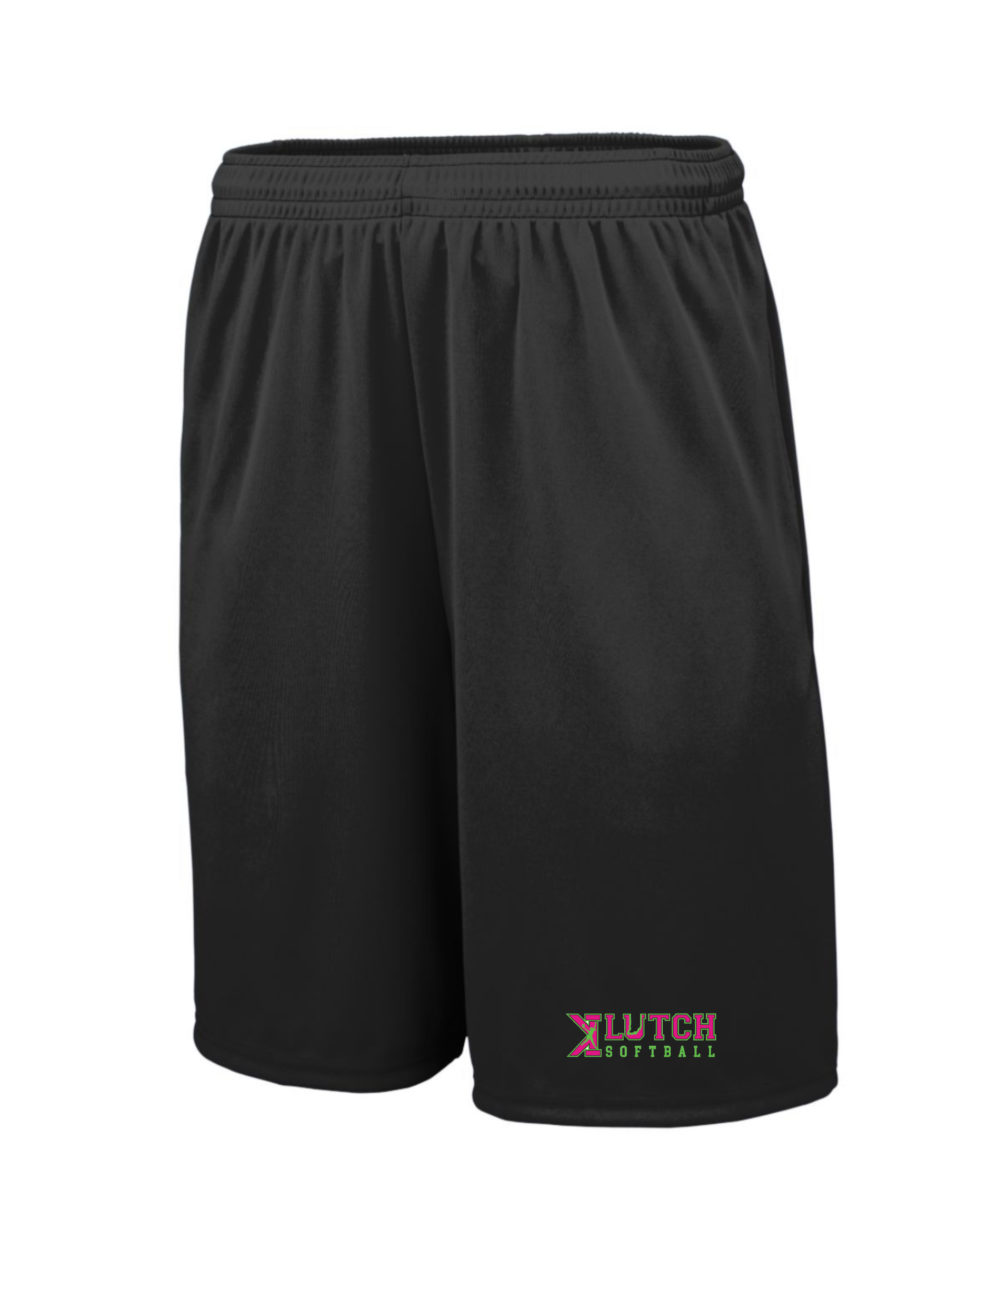 Indiana Klutch Softball Mens Shorts with Pockets - Piercy Sports